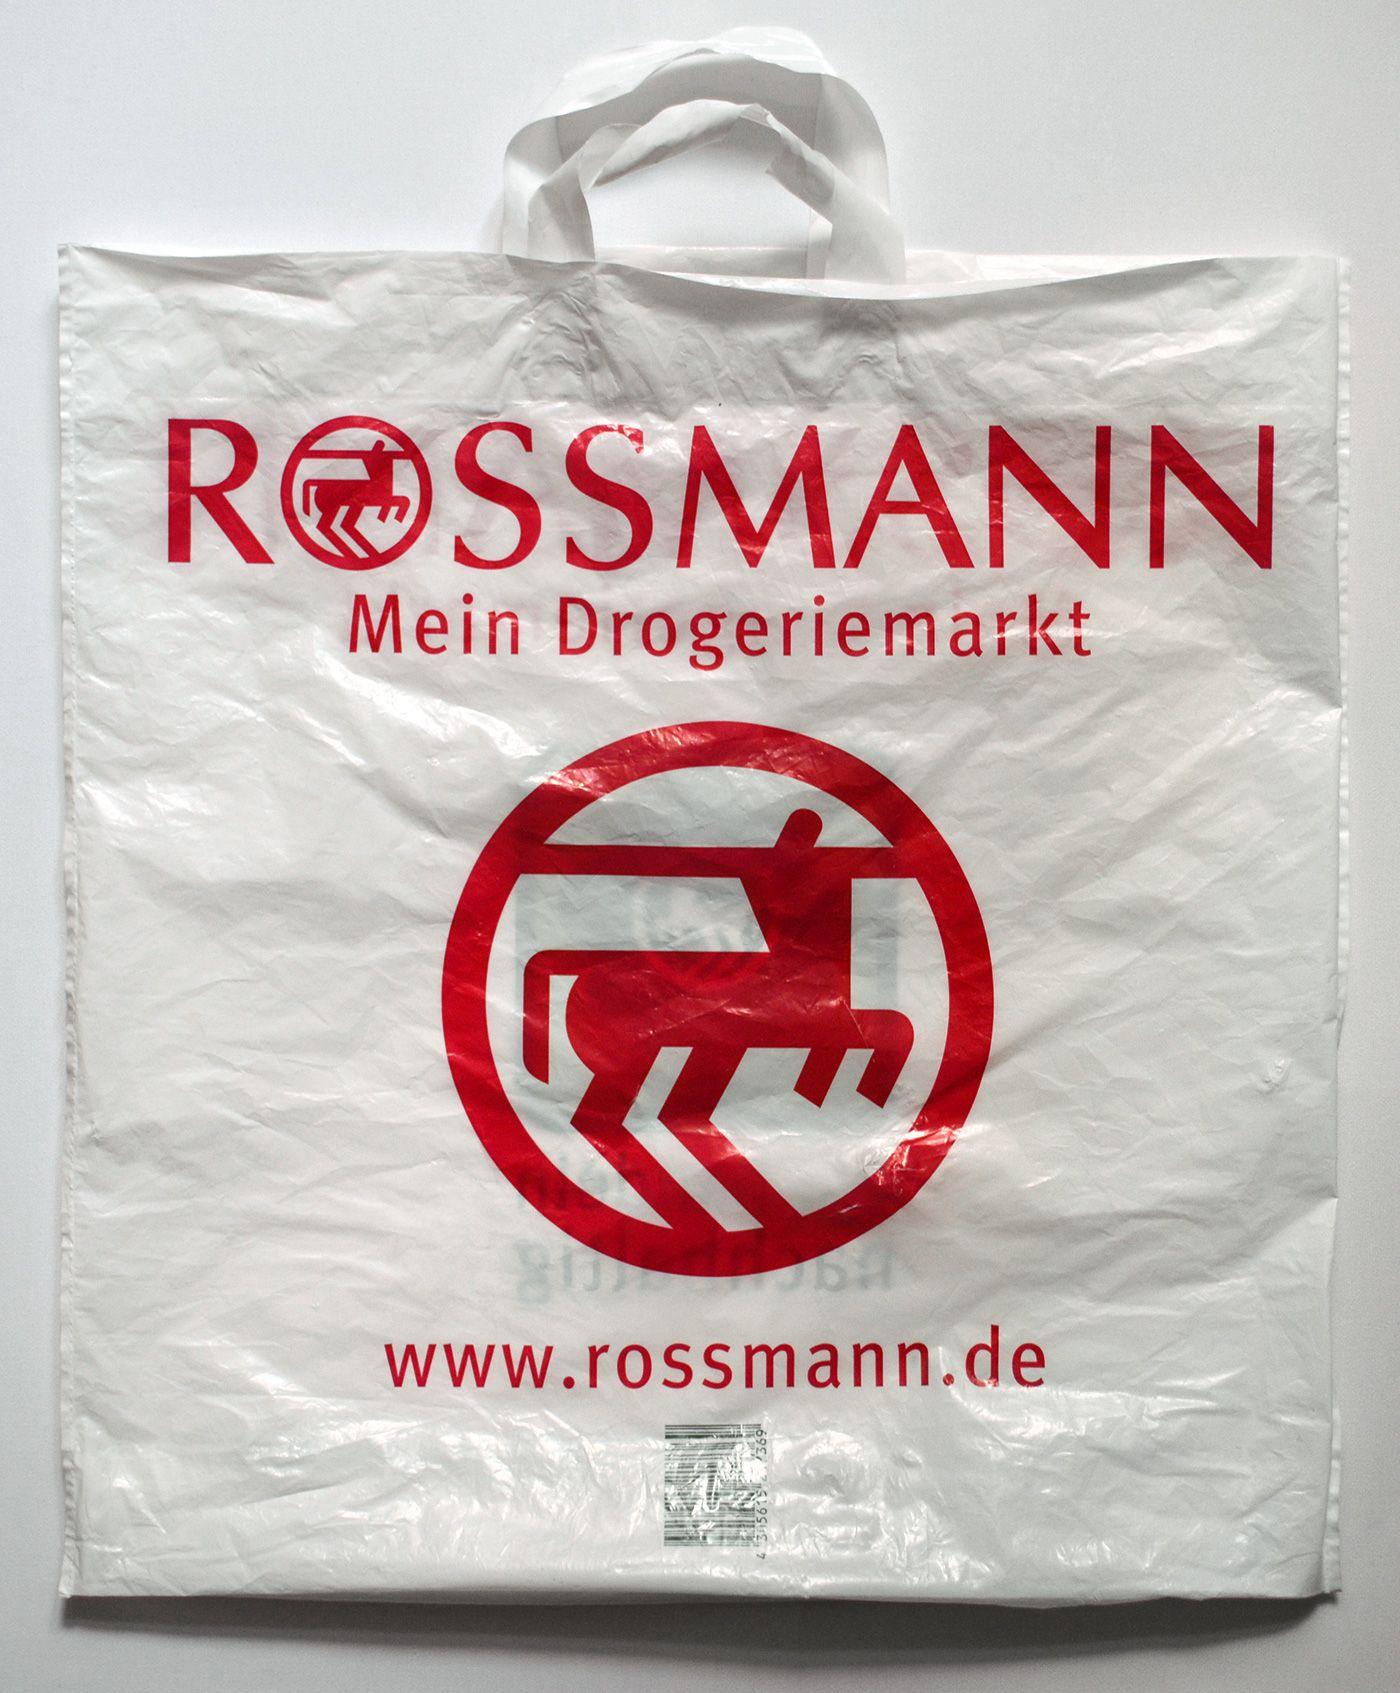 Rossmann Logo - Rossmann logo